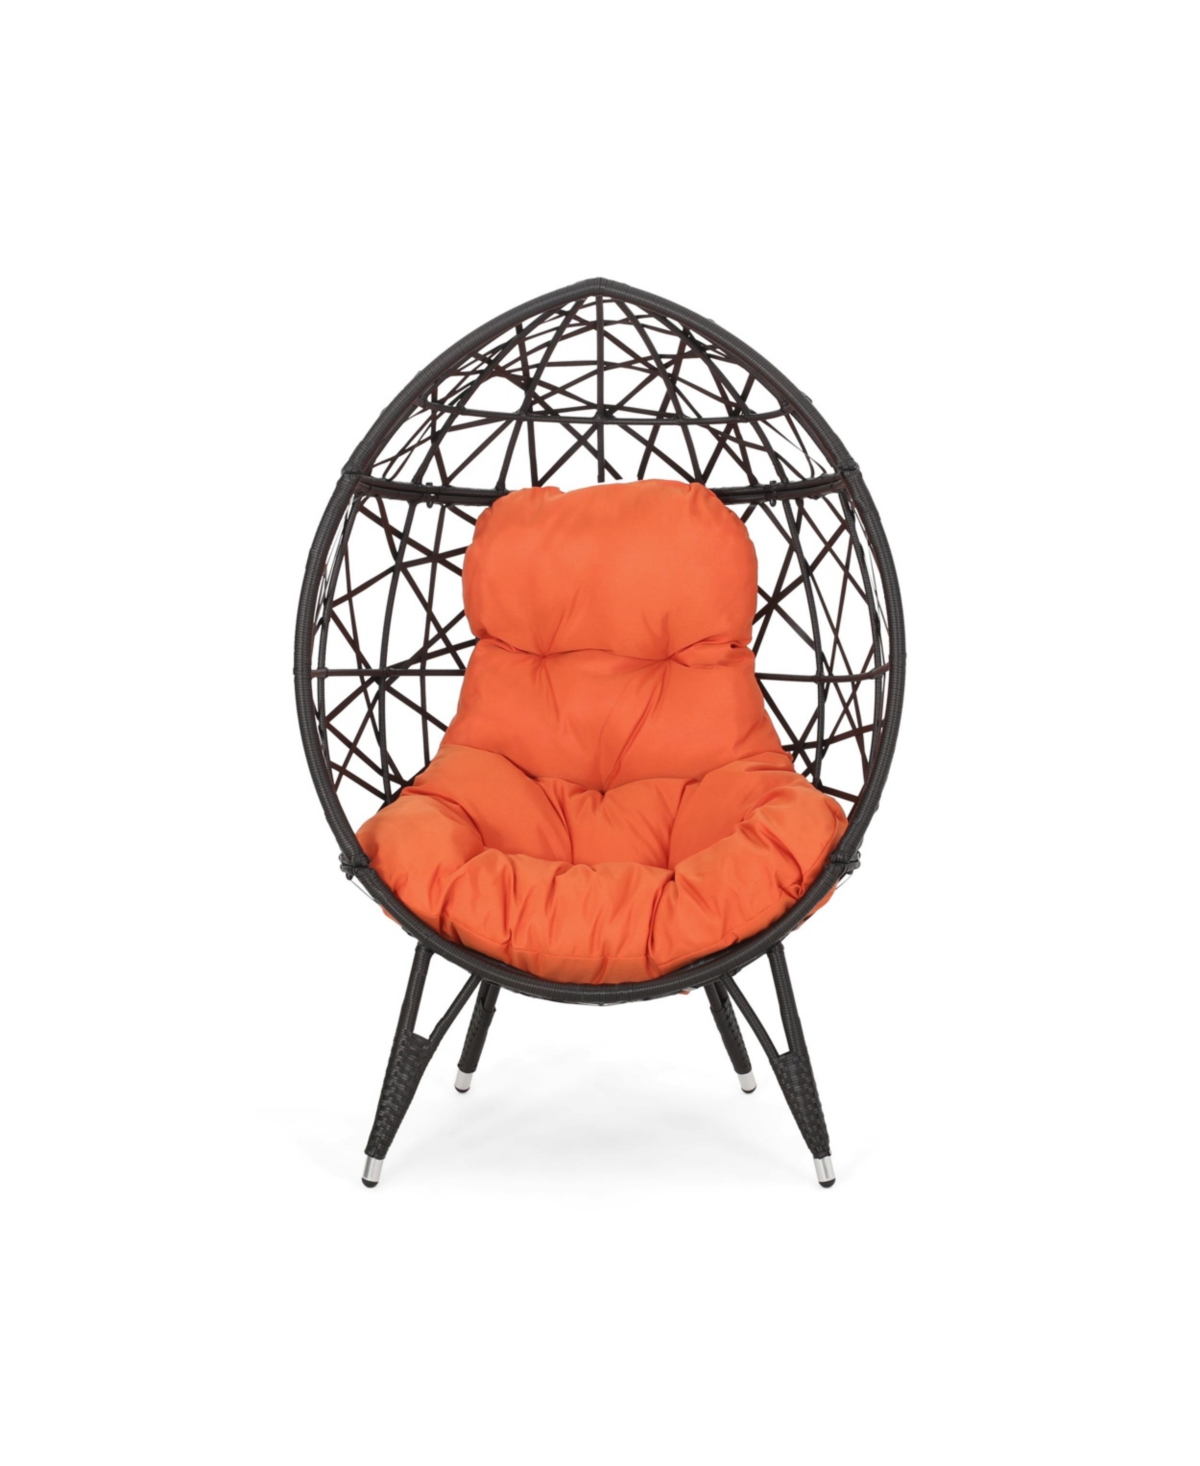 Palazzo Outdoor Wicker Teardrop Chair with Cushion